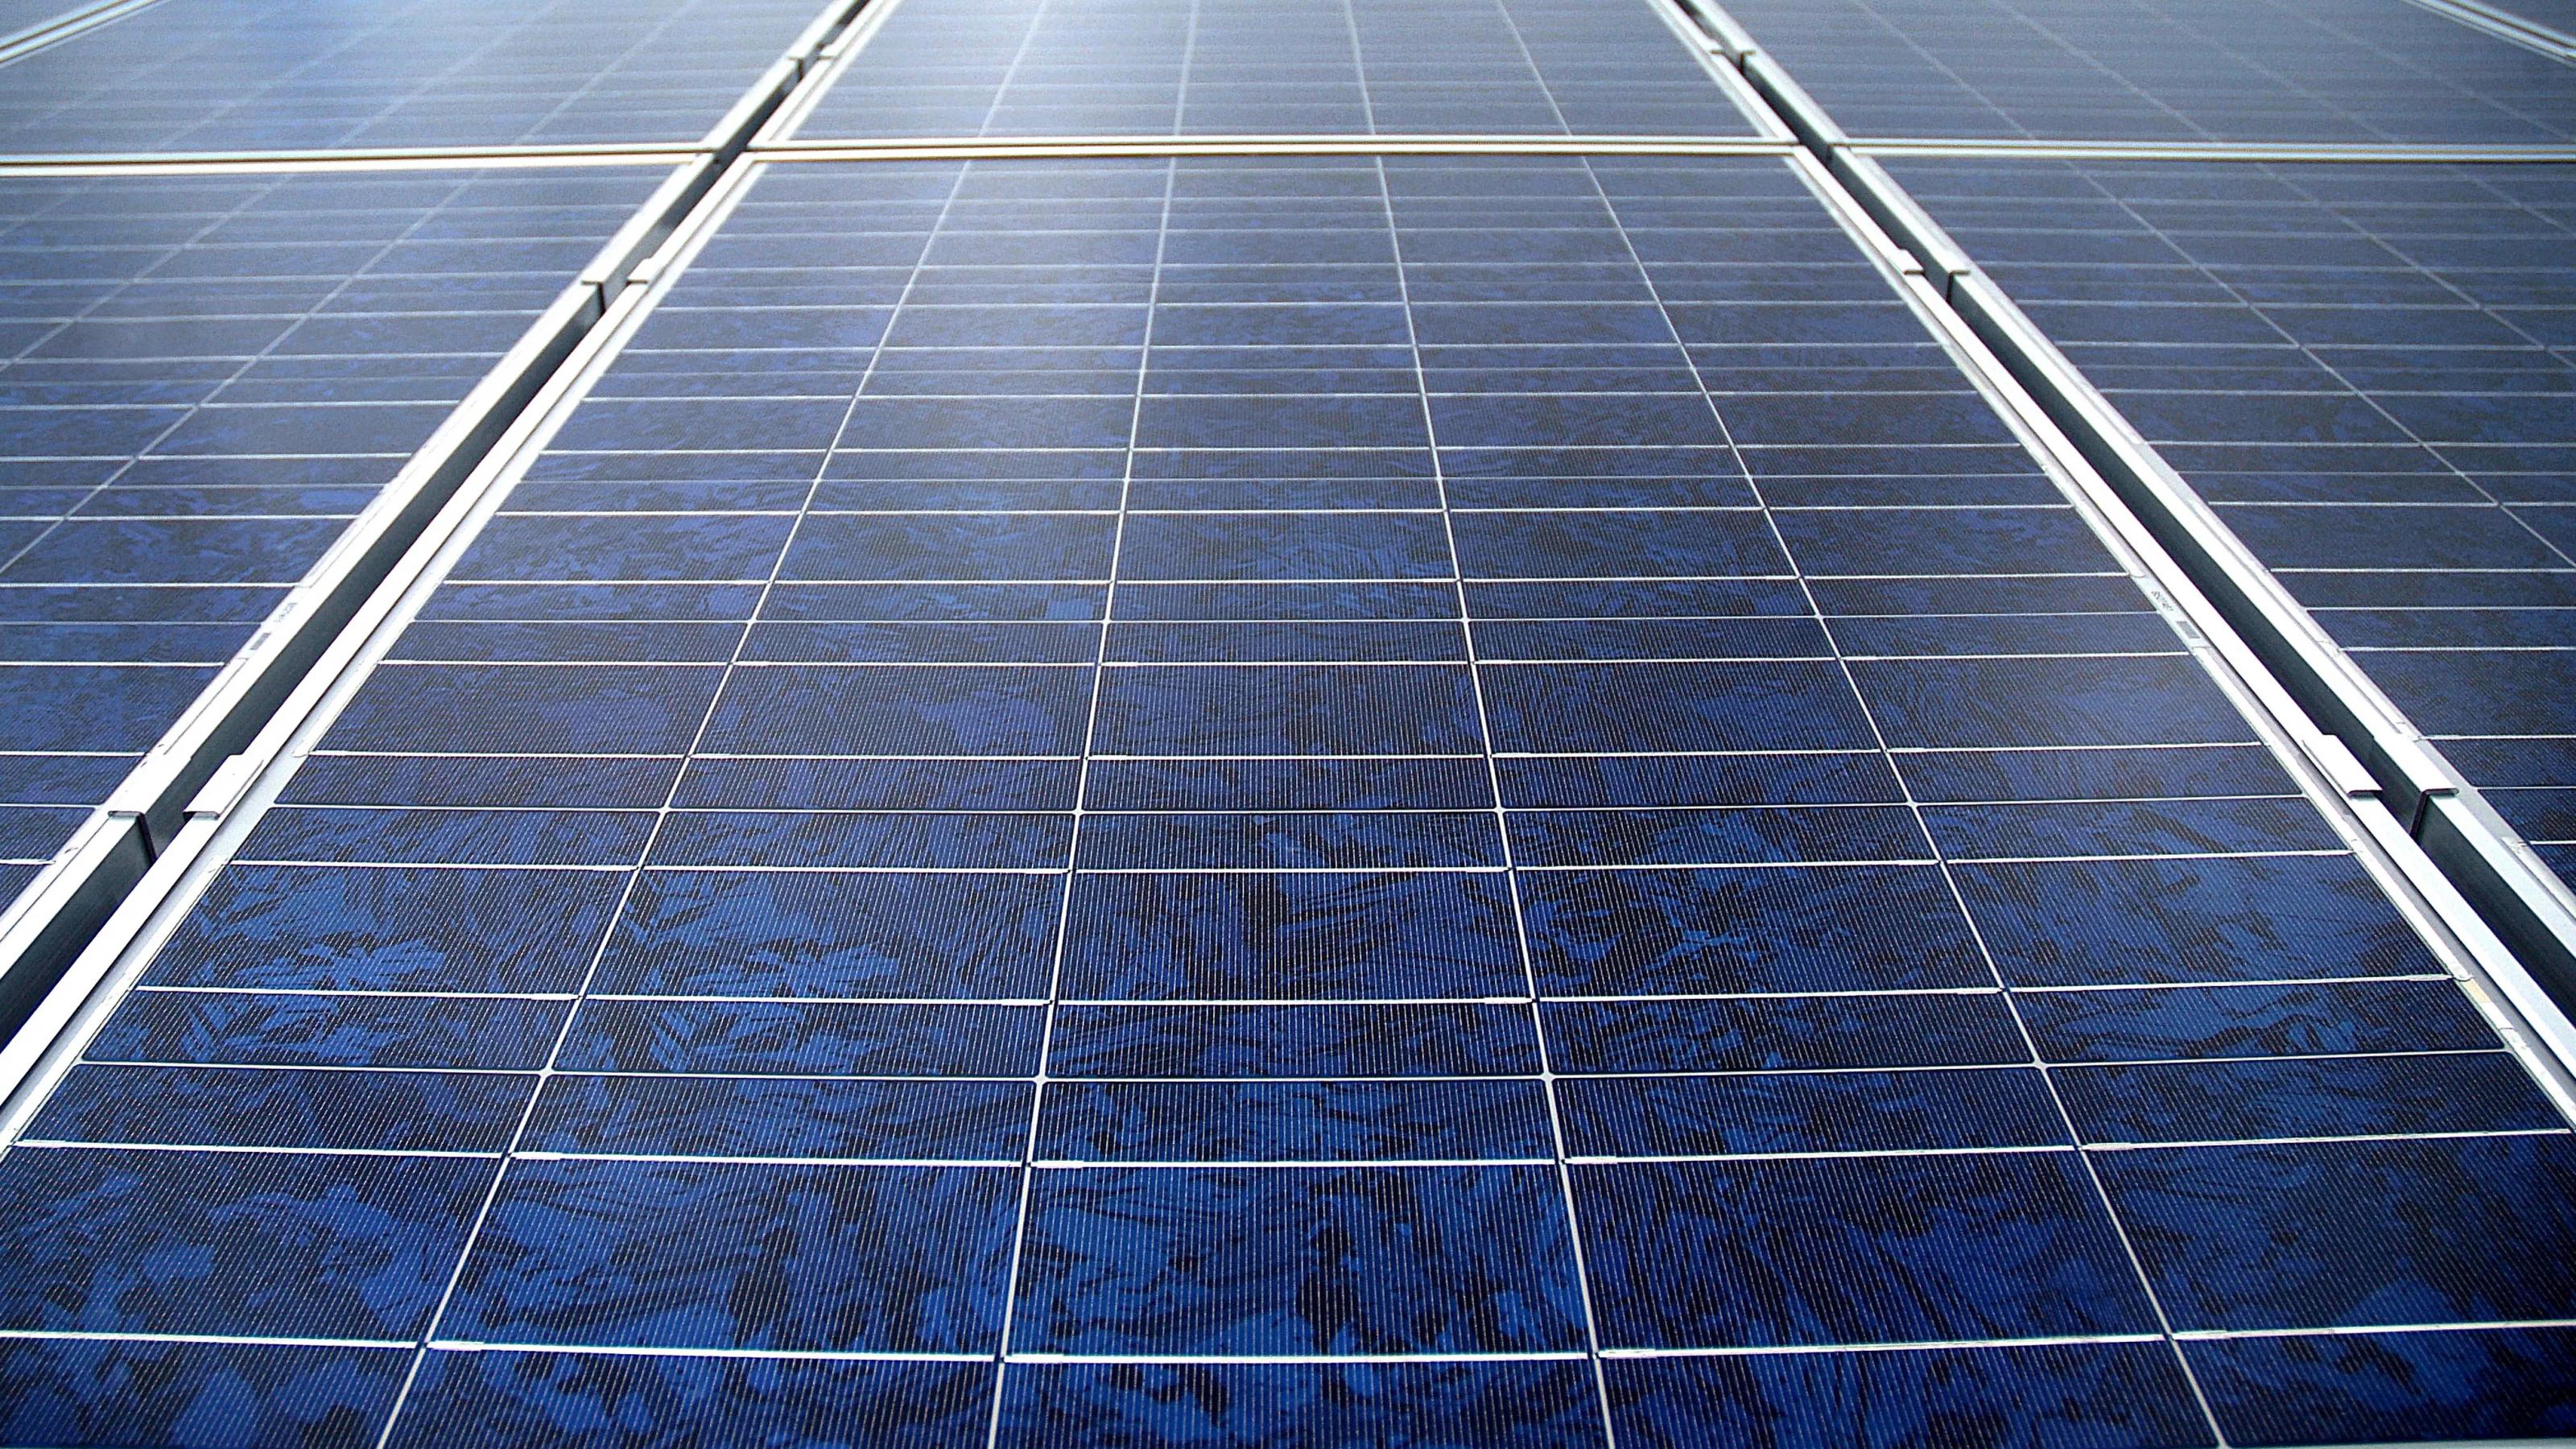 Sechs Photovoltaik-Module in starker Nahaufnahme